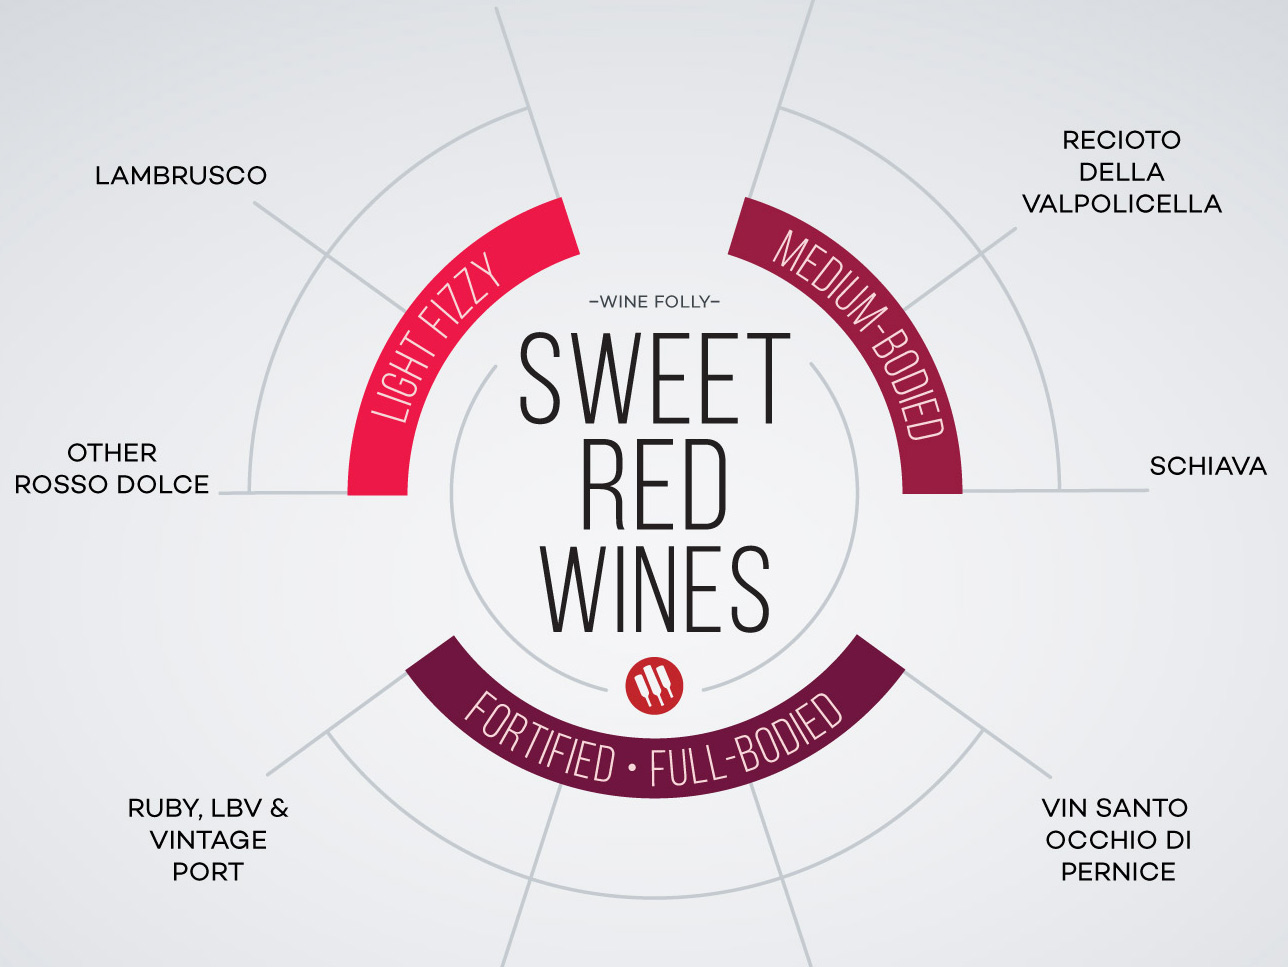 Semi-Sweet Red Wine: Balancing Flavor and Sweetness